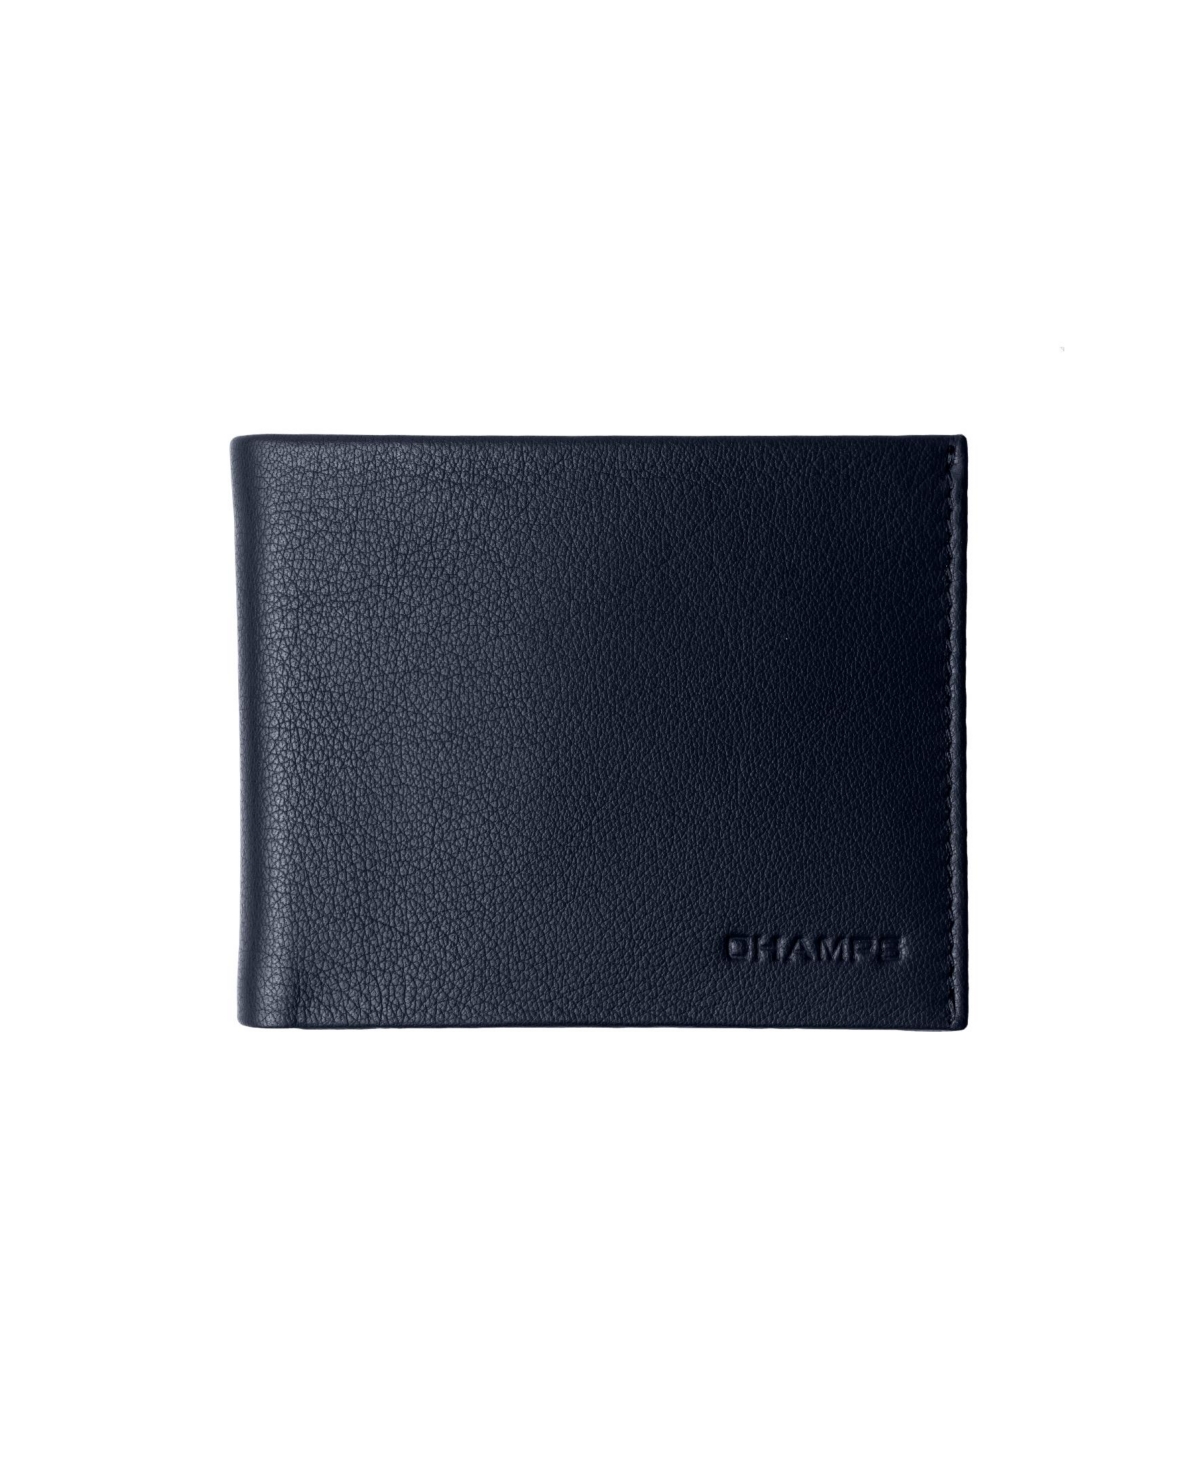 Men's Slim Leather Rfid Wallet in Gift Box - Khaki